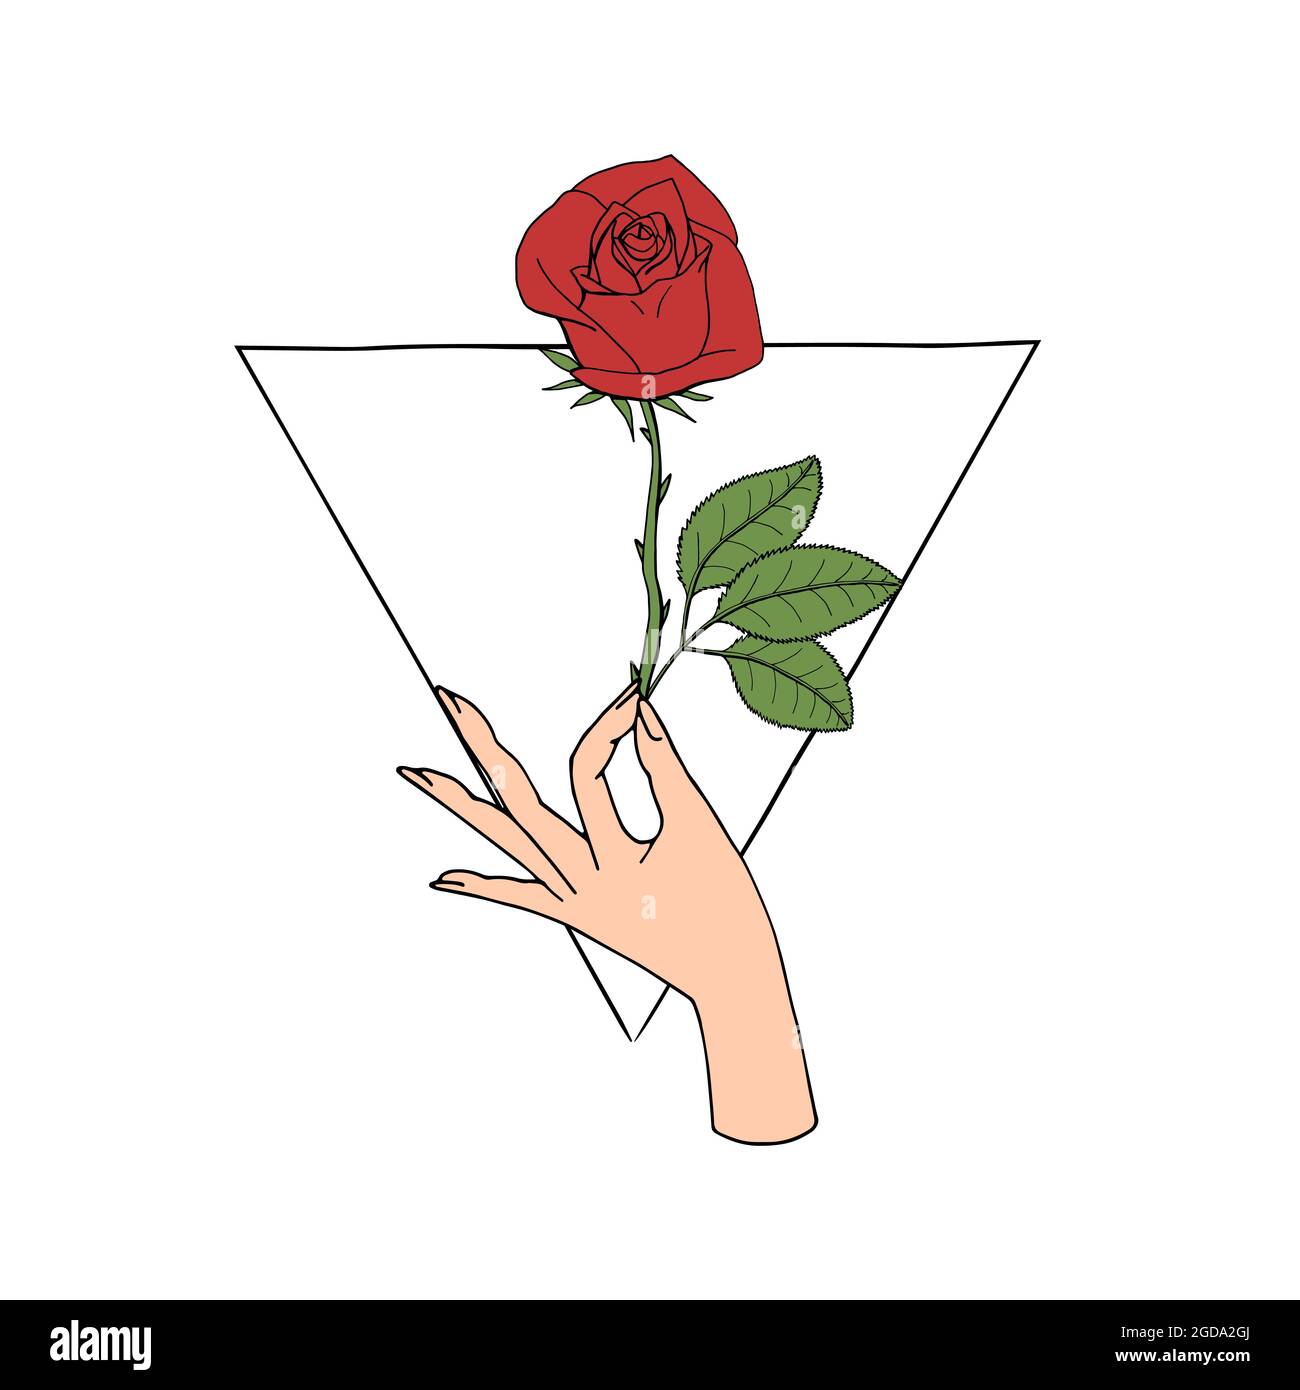 Rose drawing stock vector. Illustration of decorative - 12387187-saigonsouth.com.vn